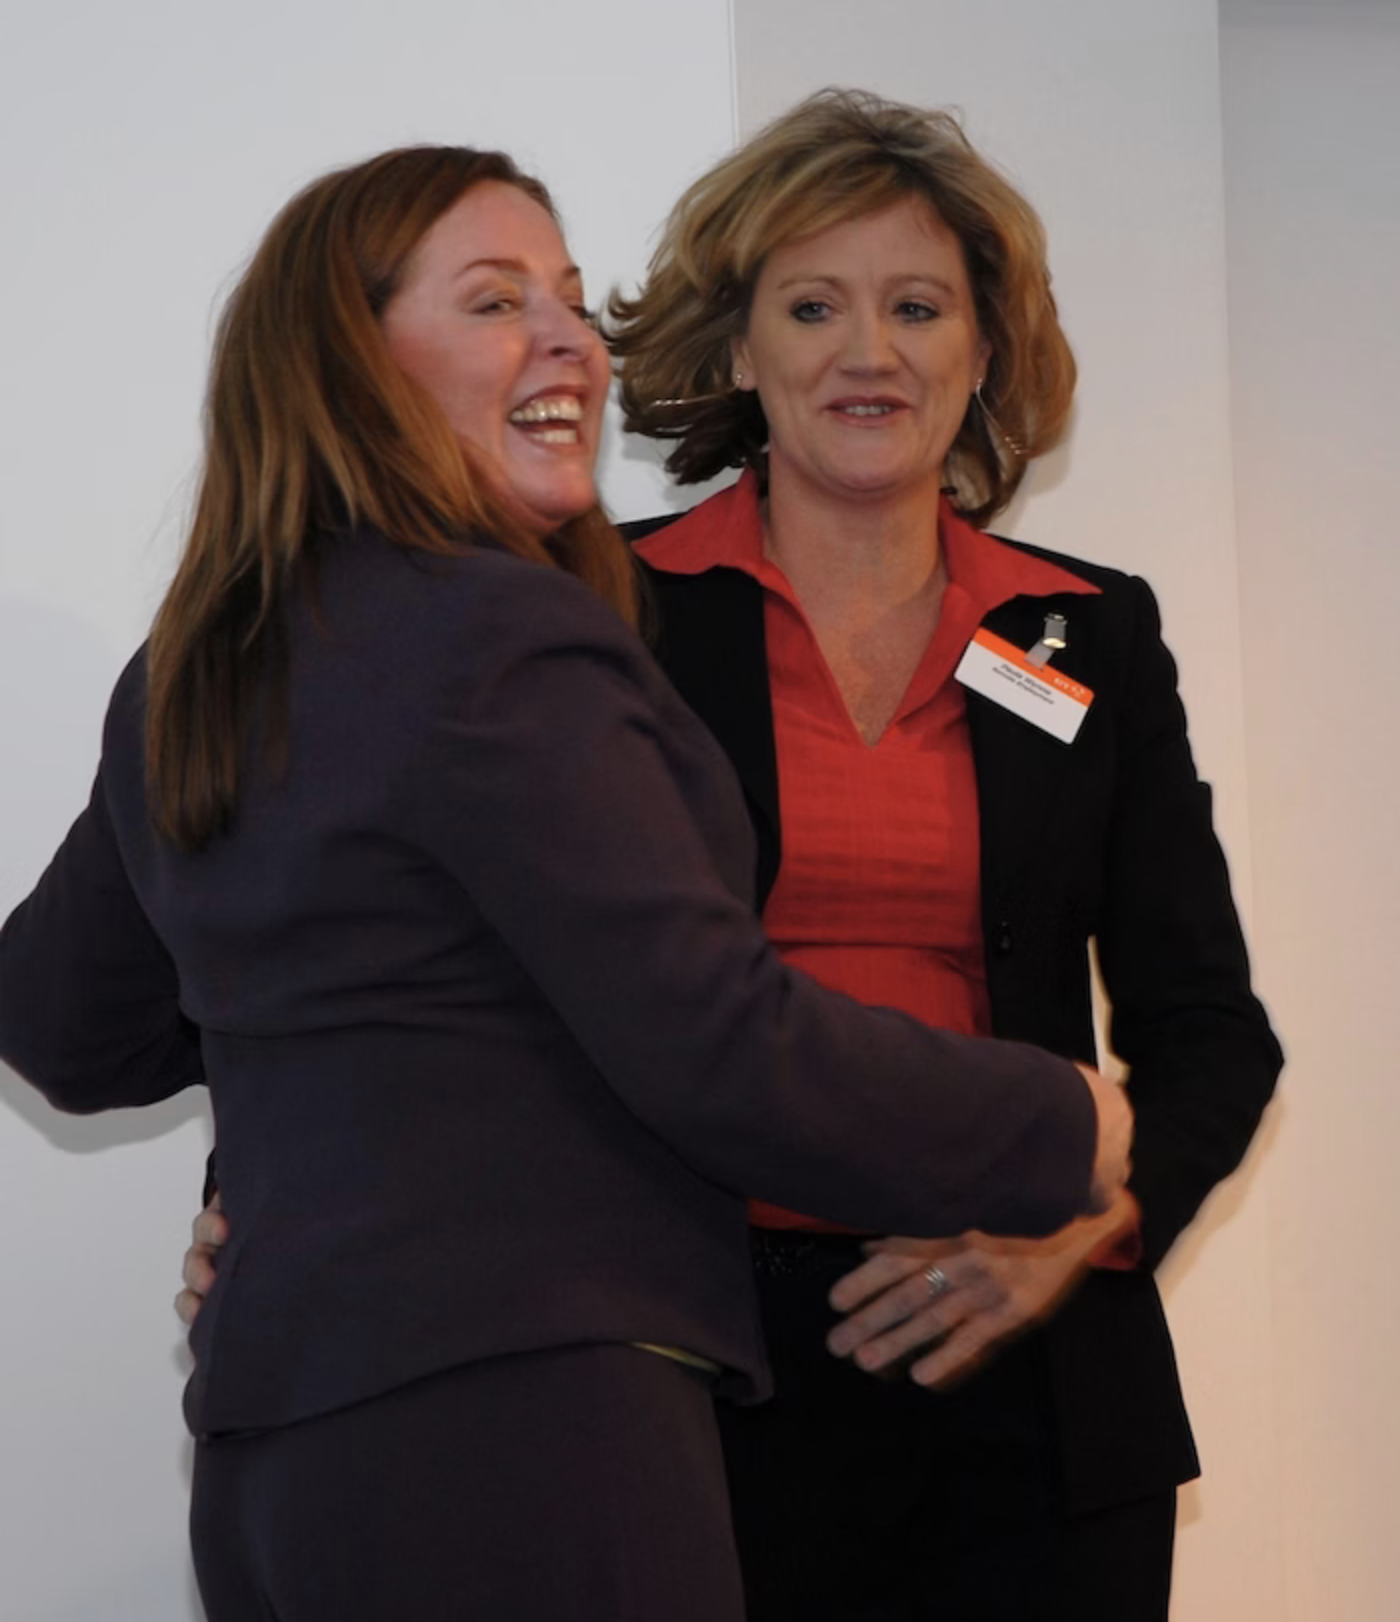 Paula Wynne won Karen Darby as her business mentor